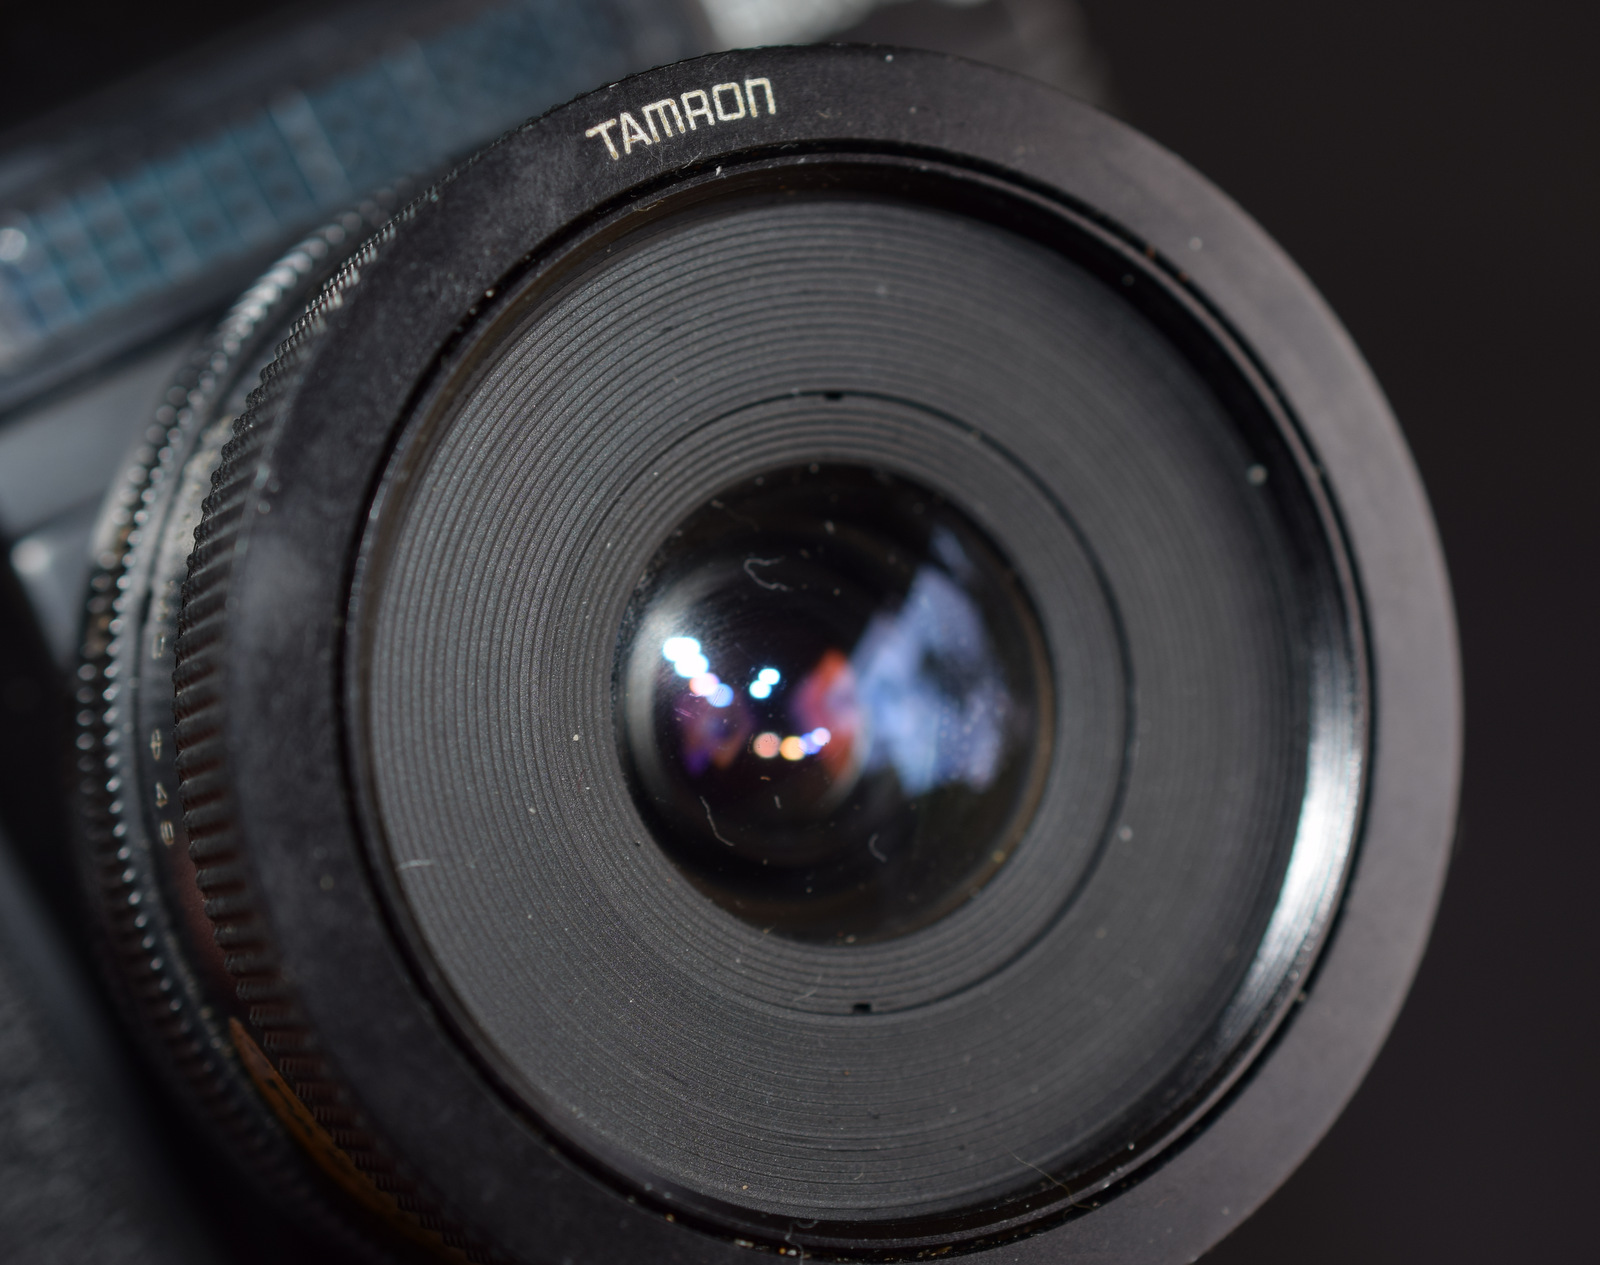 Zenit EM 35mm Camera With Tamron 28mm 1:2.5 - Image 2 of 4